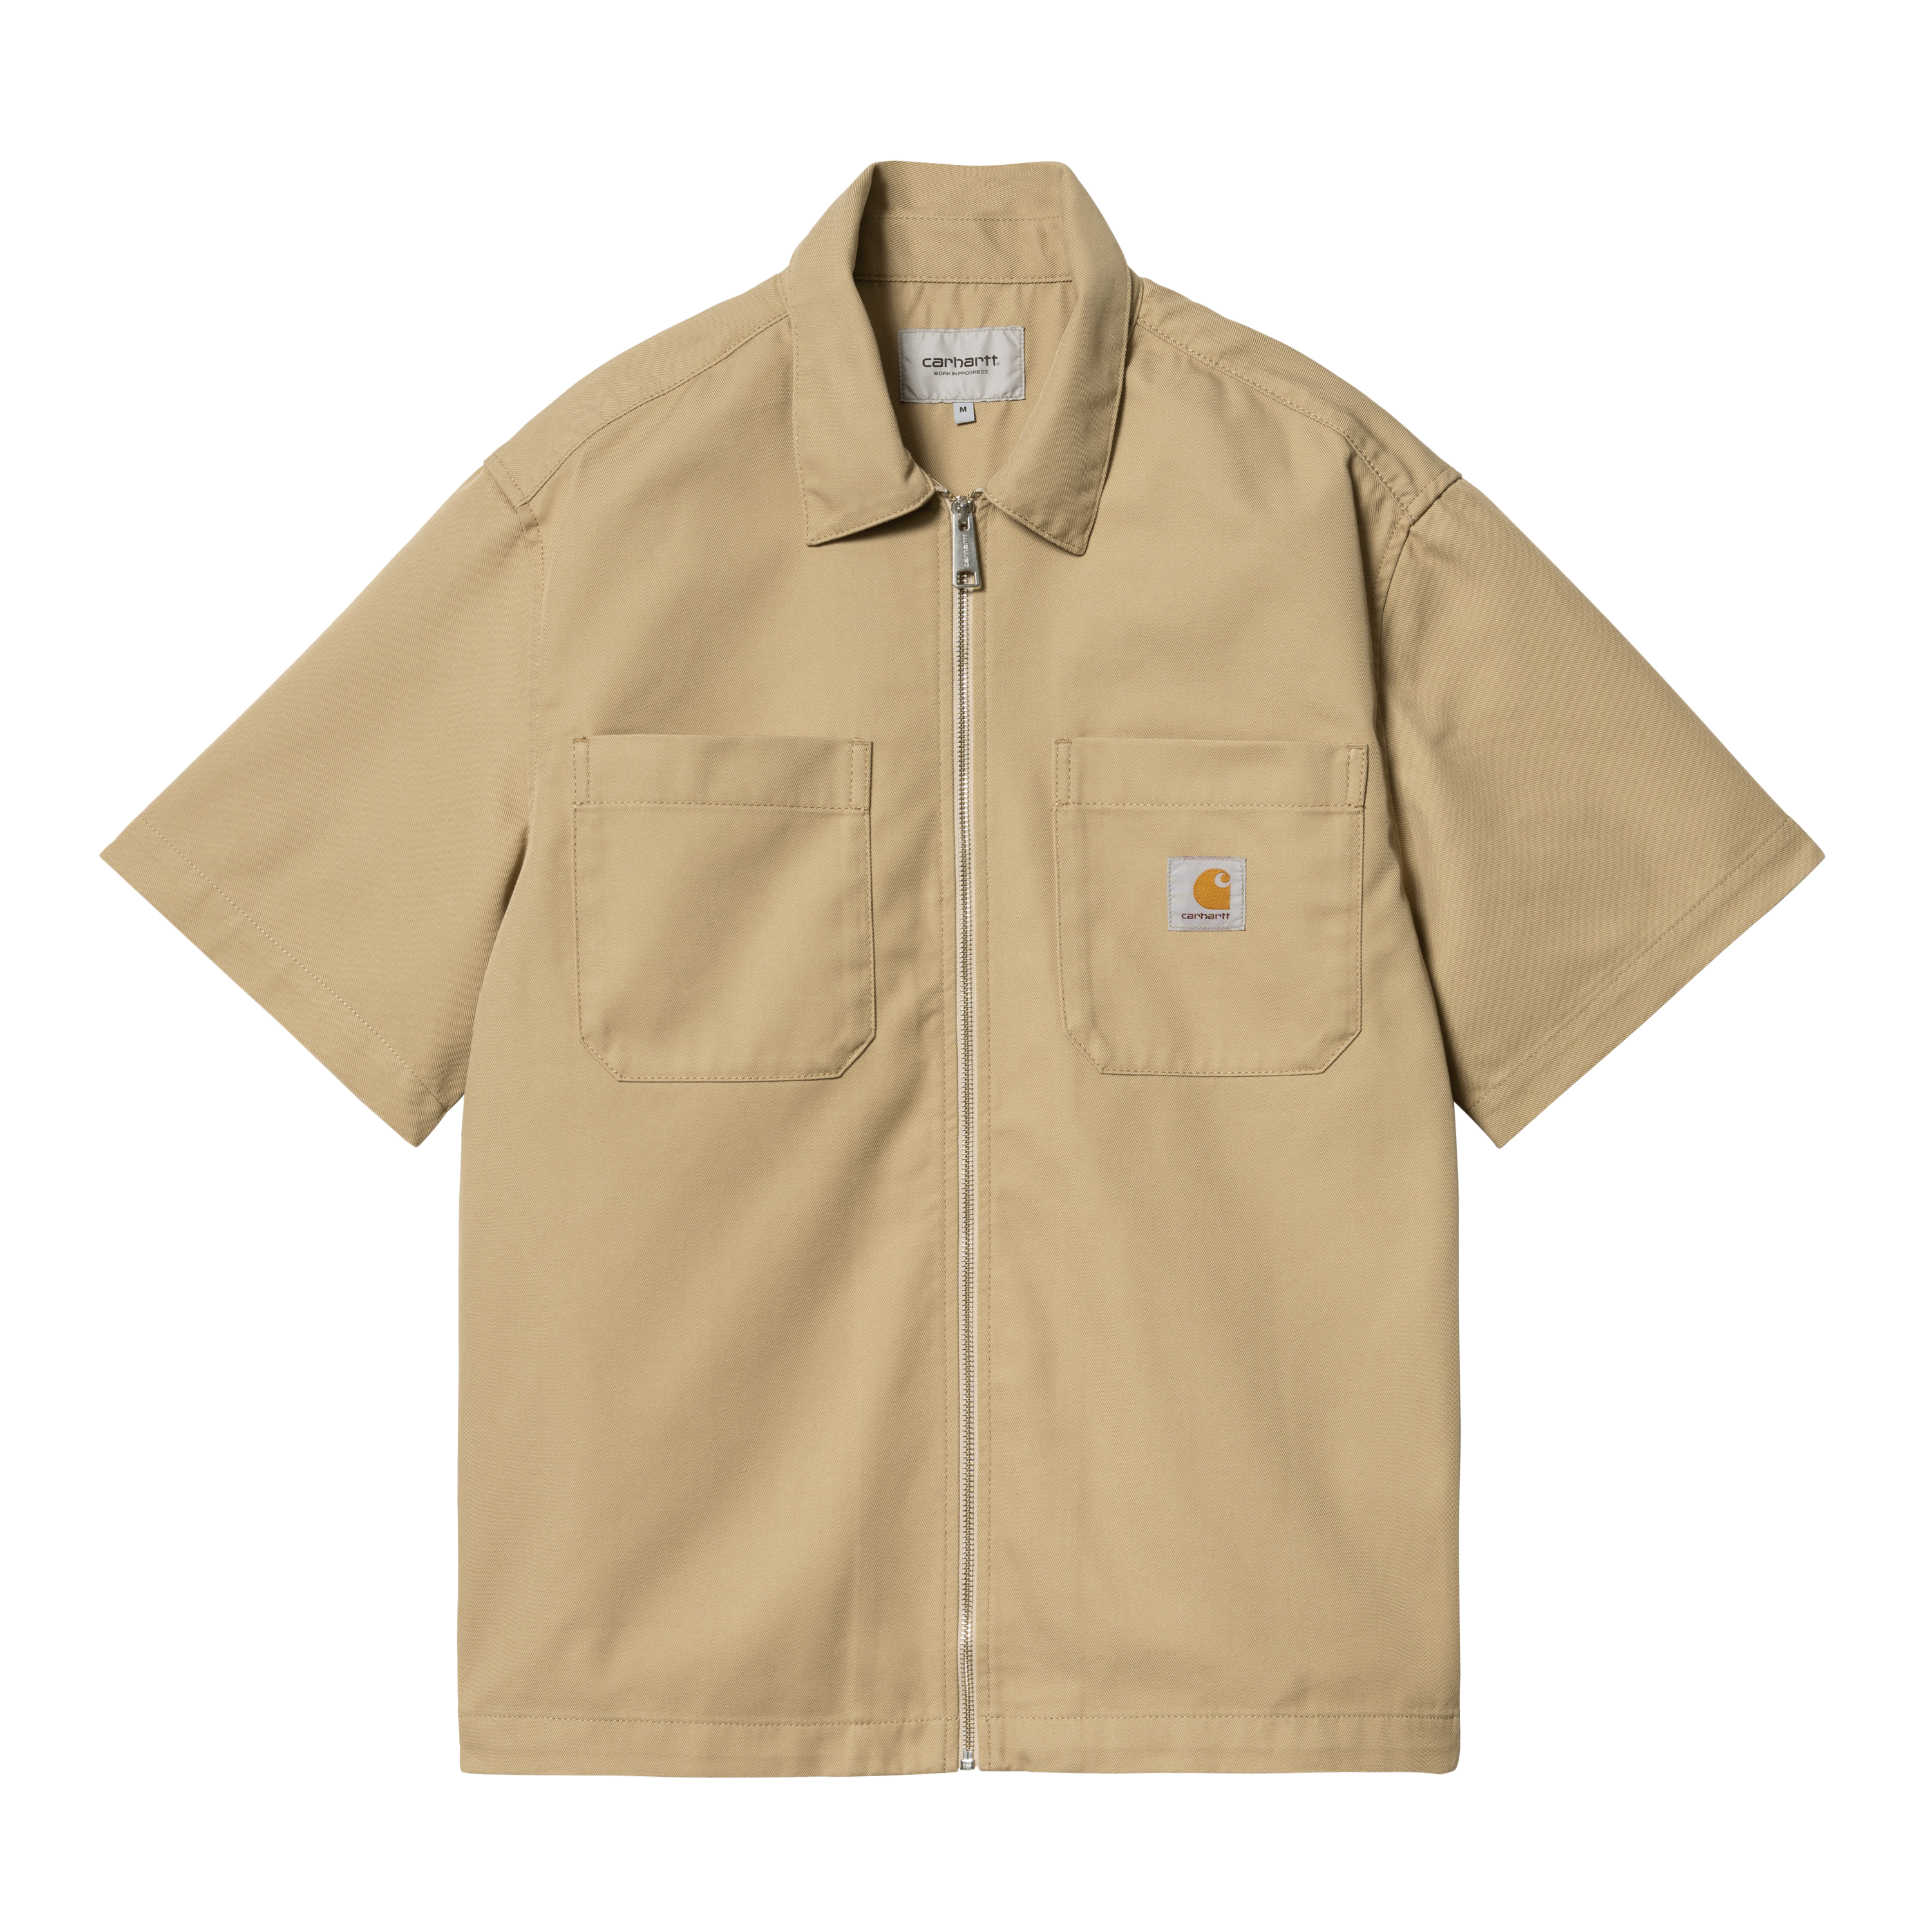 Carhartt WIP Short Sleeve Sandler Shirt in Beige